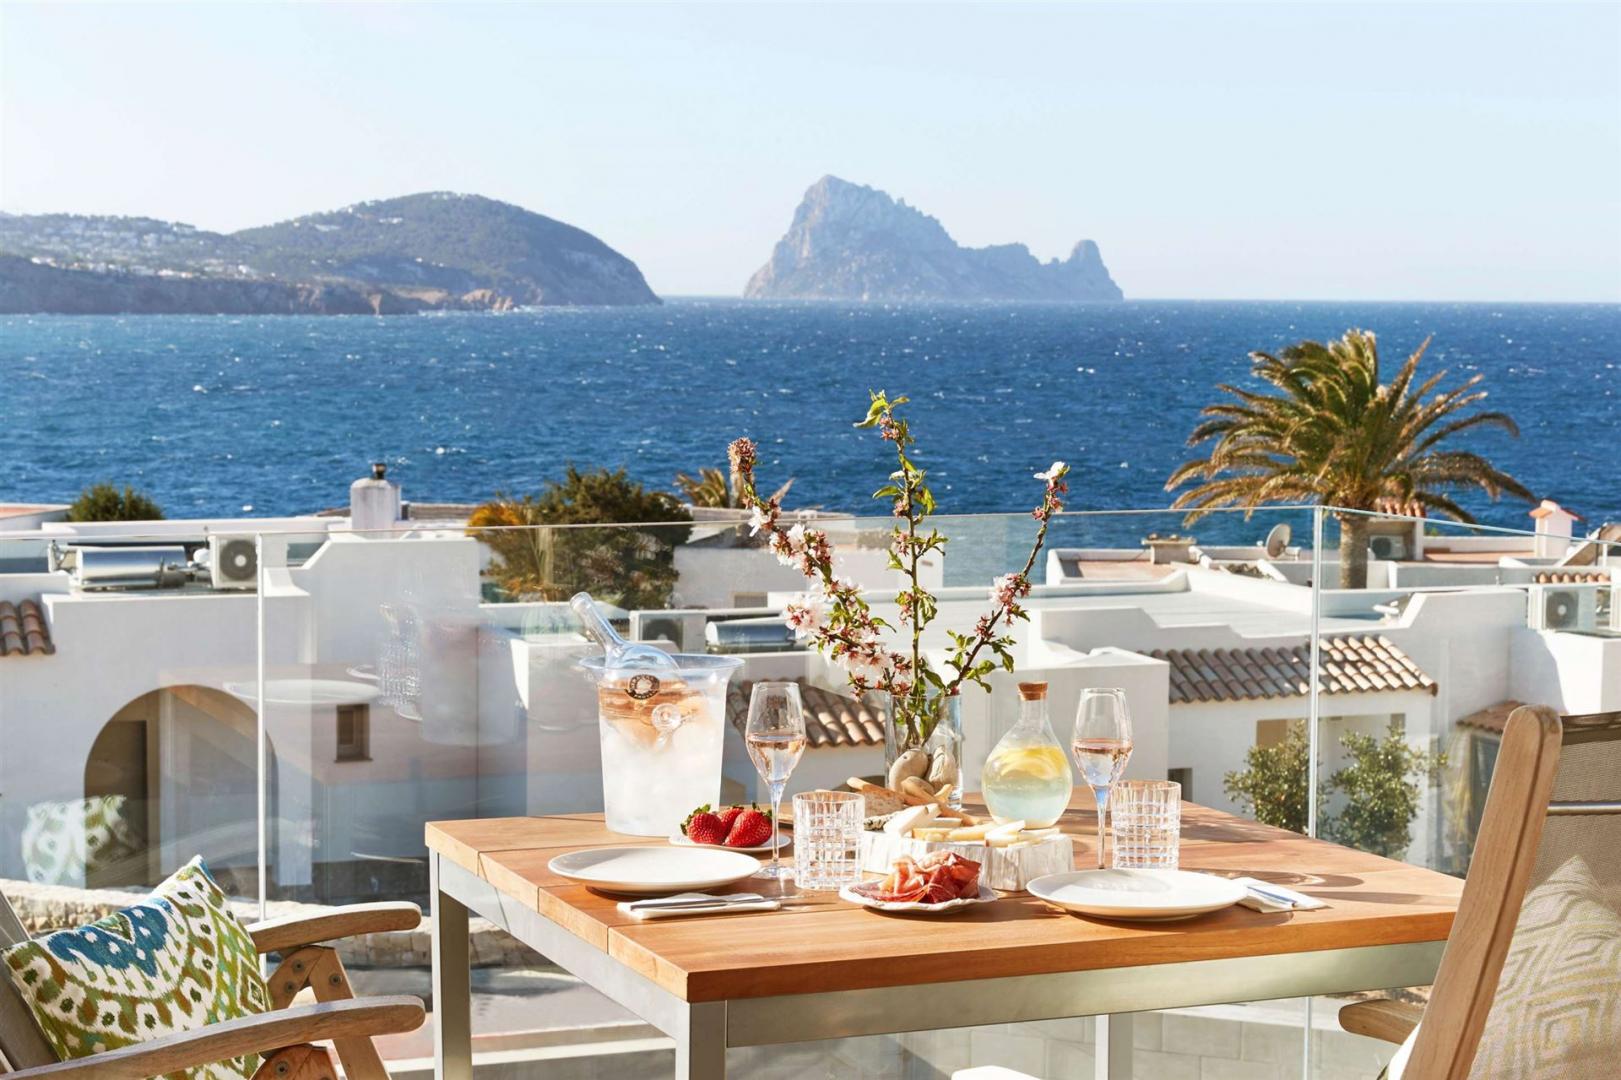 7Pines Kempinski Ibiza luxe hotel deals